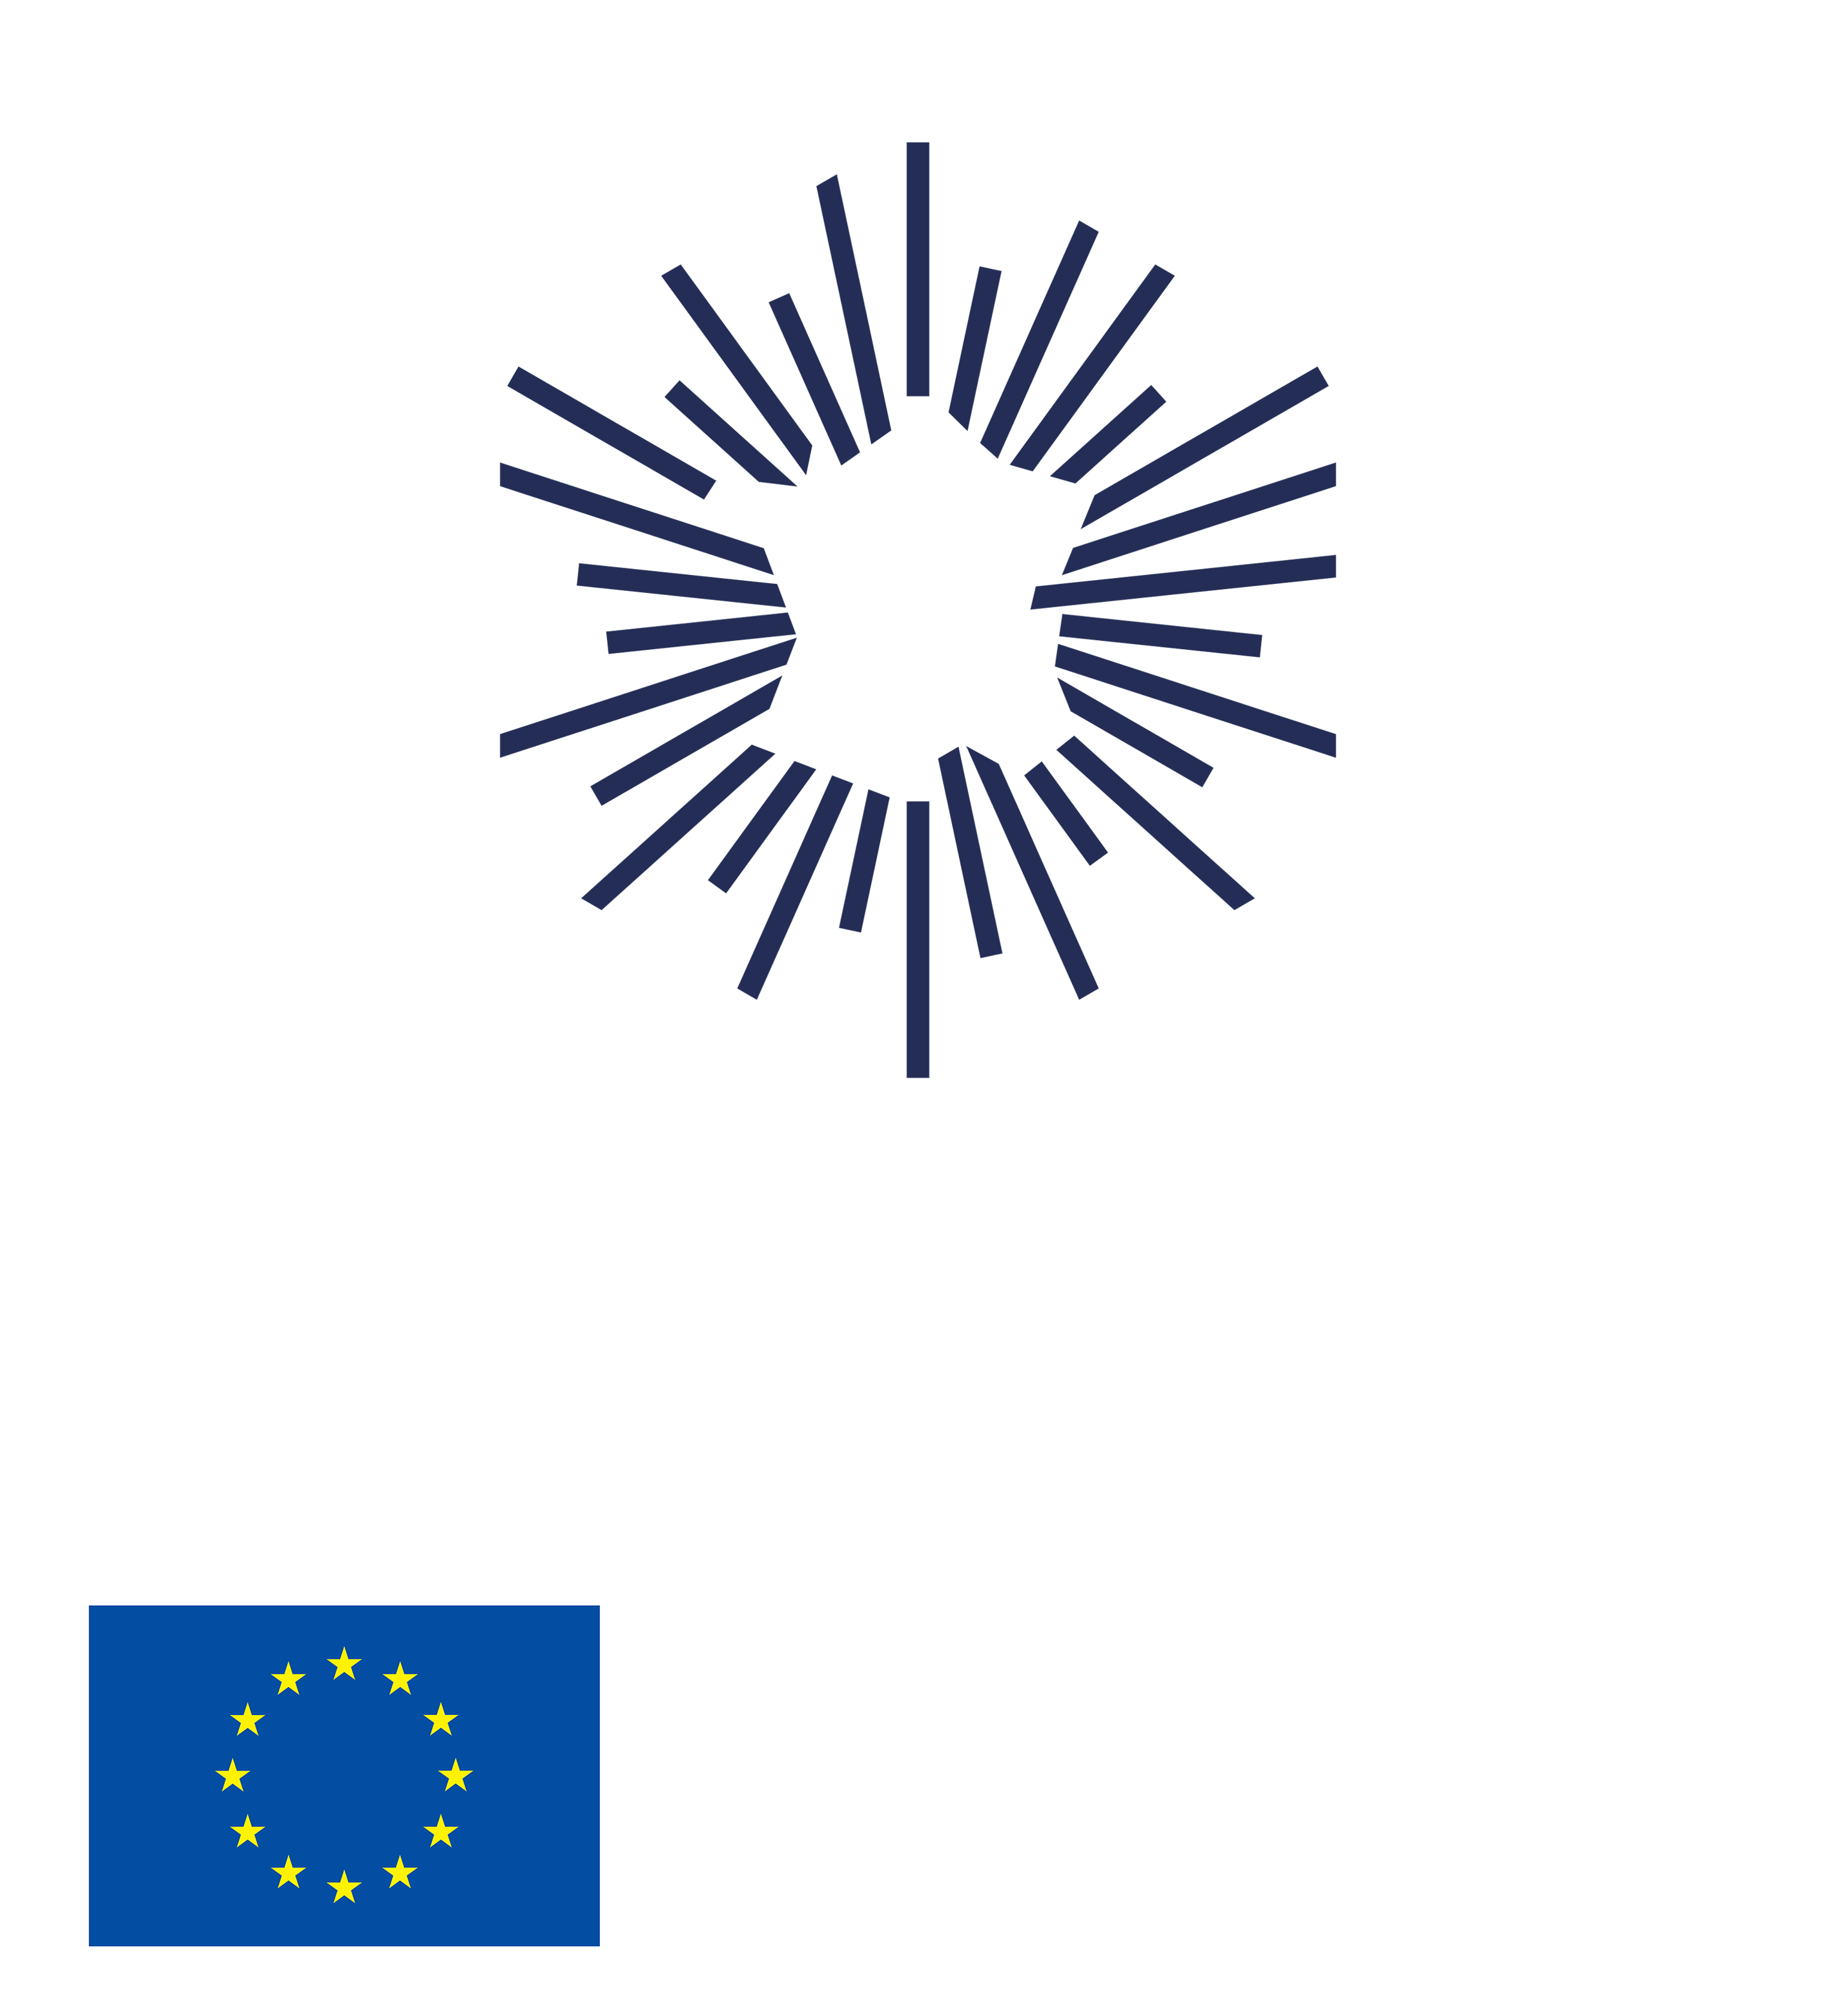 Fondation la France s’engage